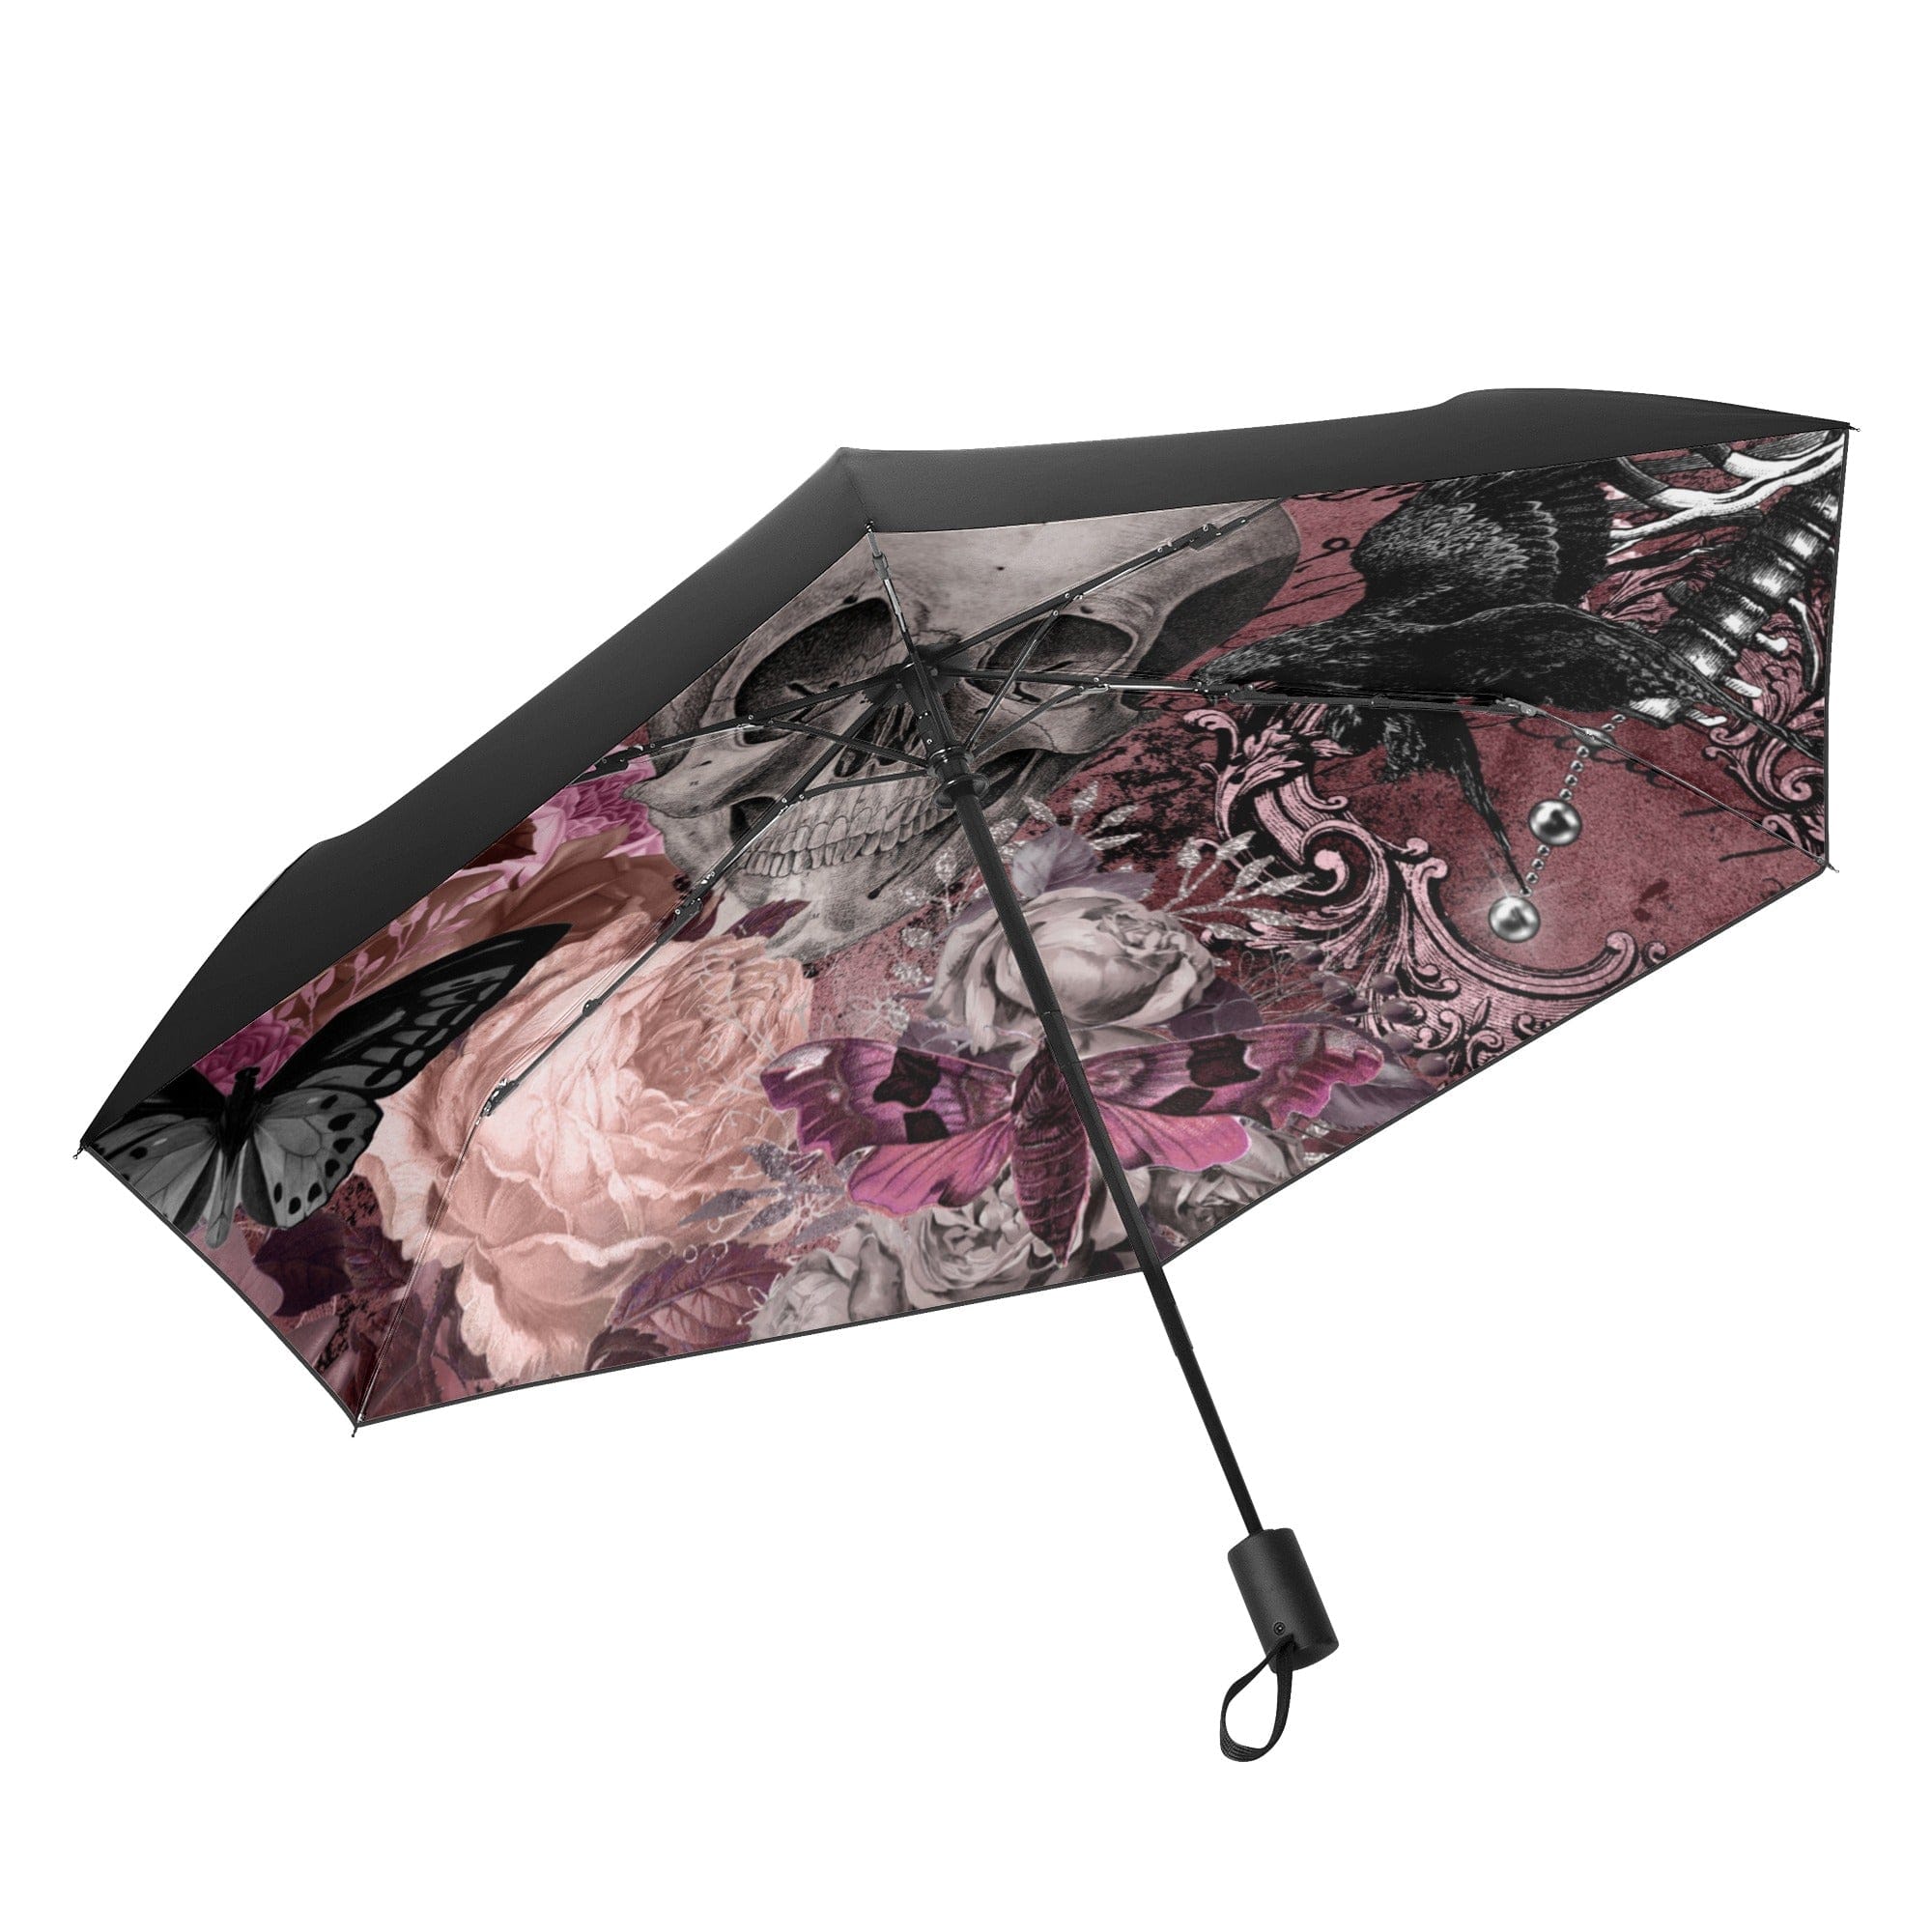 Skull Pink Floral Fully Auto Open & Close Umbrella